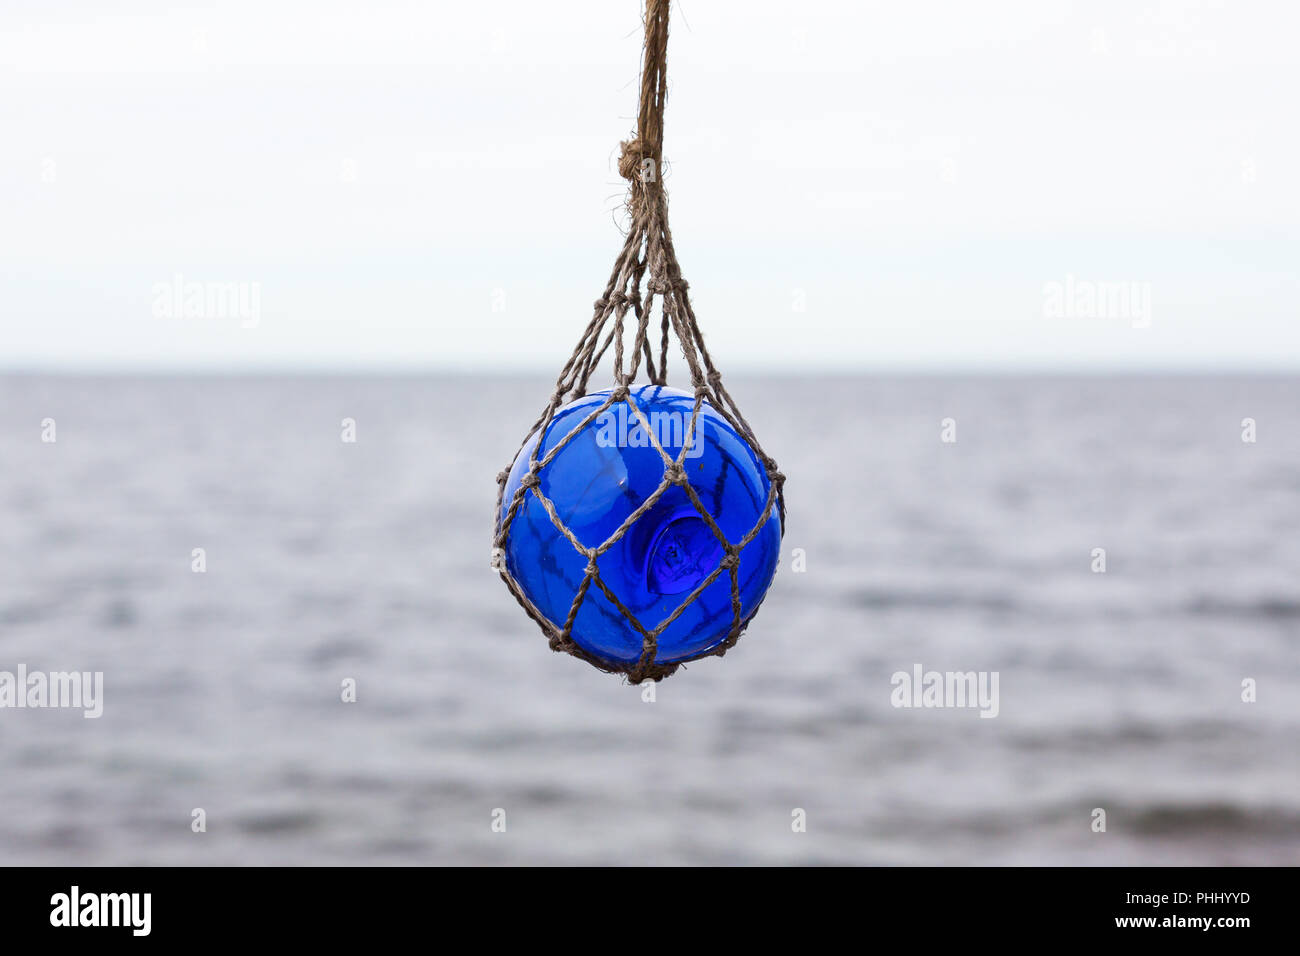 https://c8.alamy.com/comp/PHHYYD/glass-buoy-hanging-in-a-net-PHHYYD.jpg